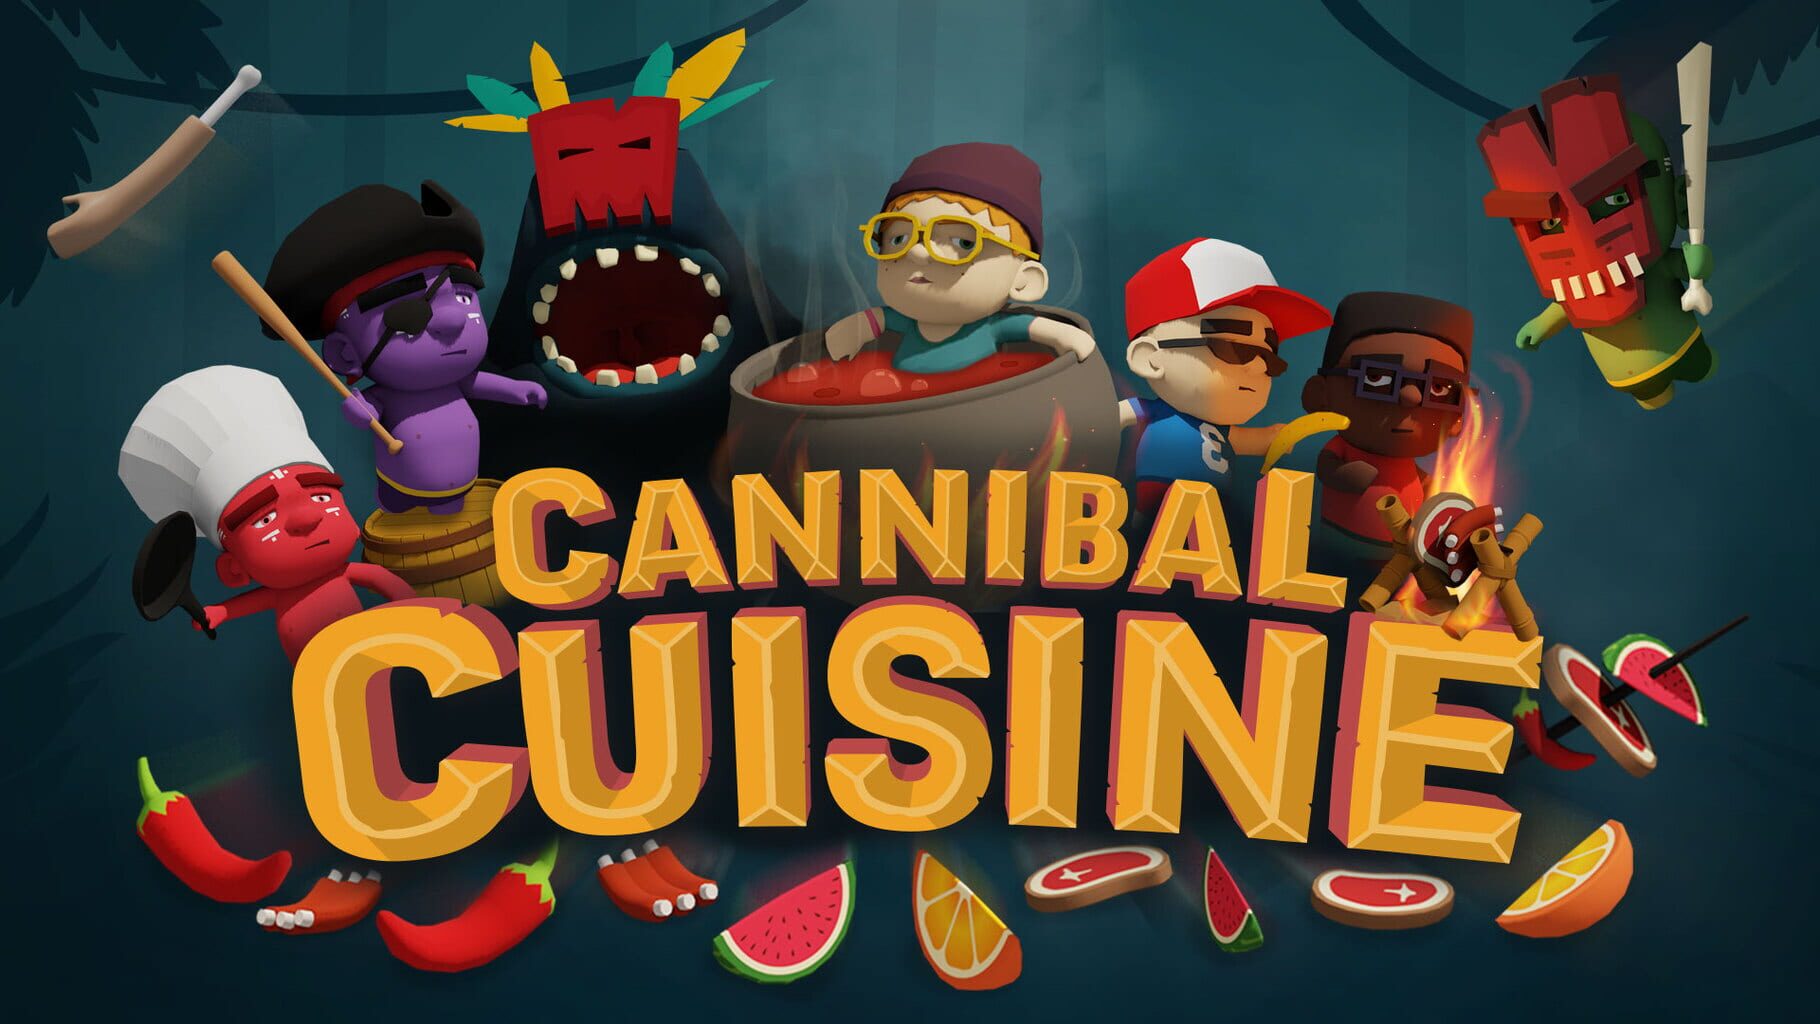 Cannibal Cuisine artwork